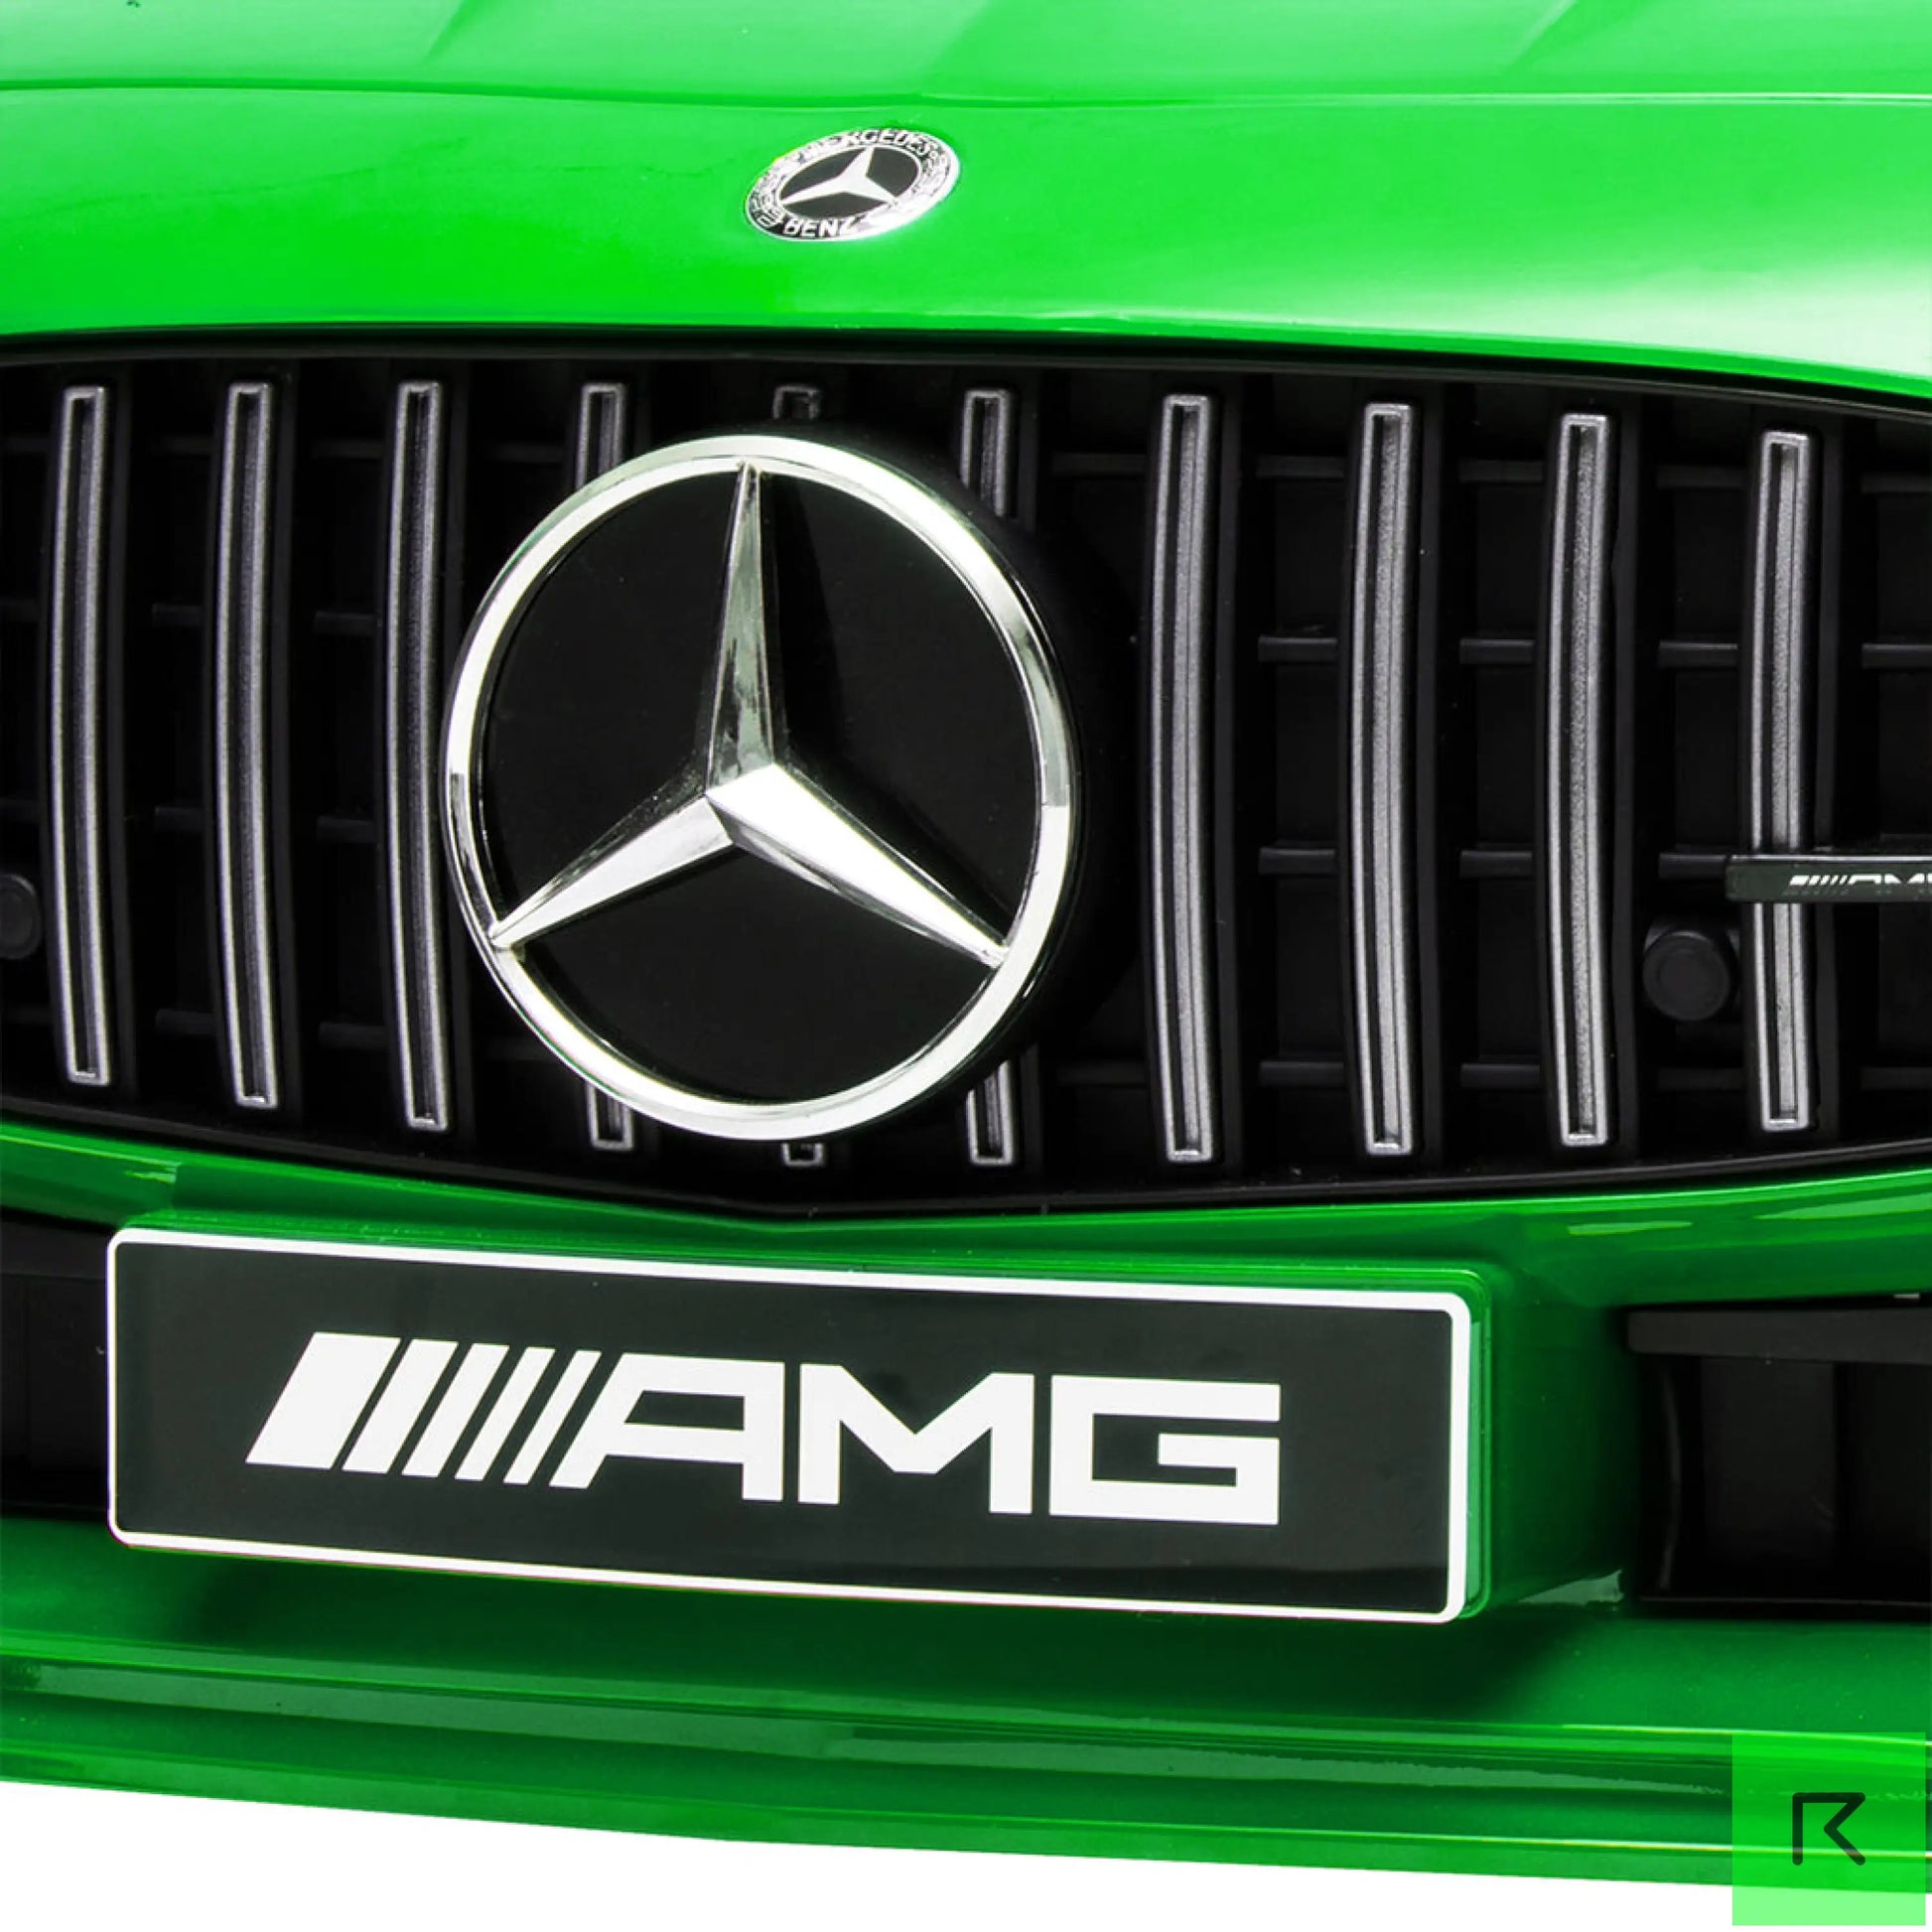 Kids Green 12 V AMG GTR Licensed Mercedes-Benz Ride On Electric Car - Ride on car